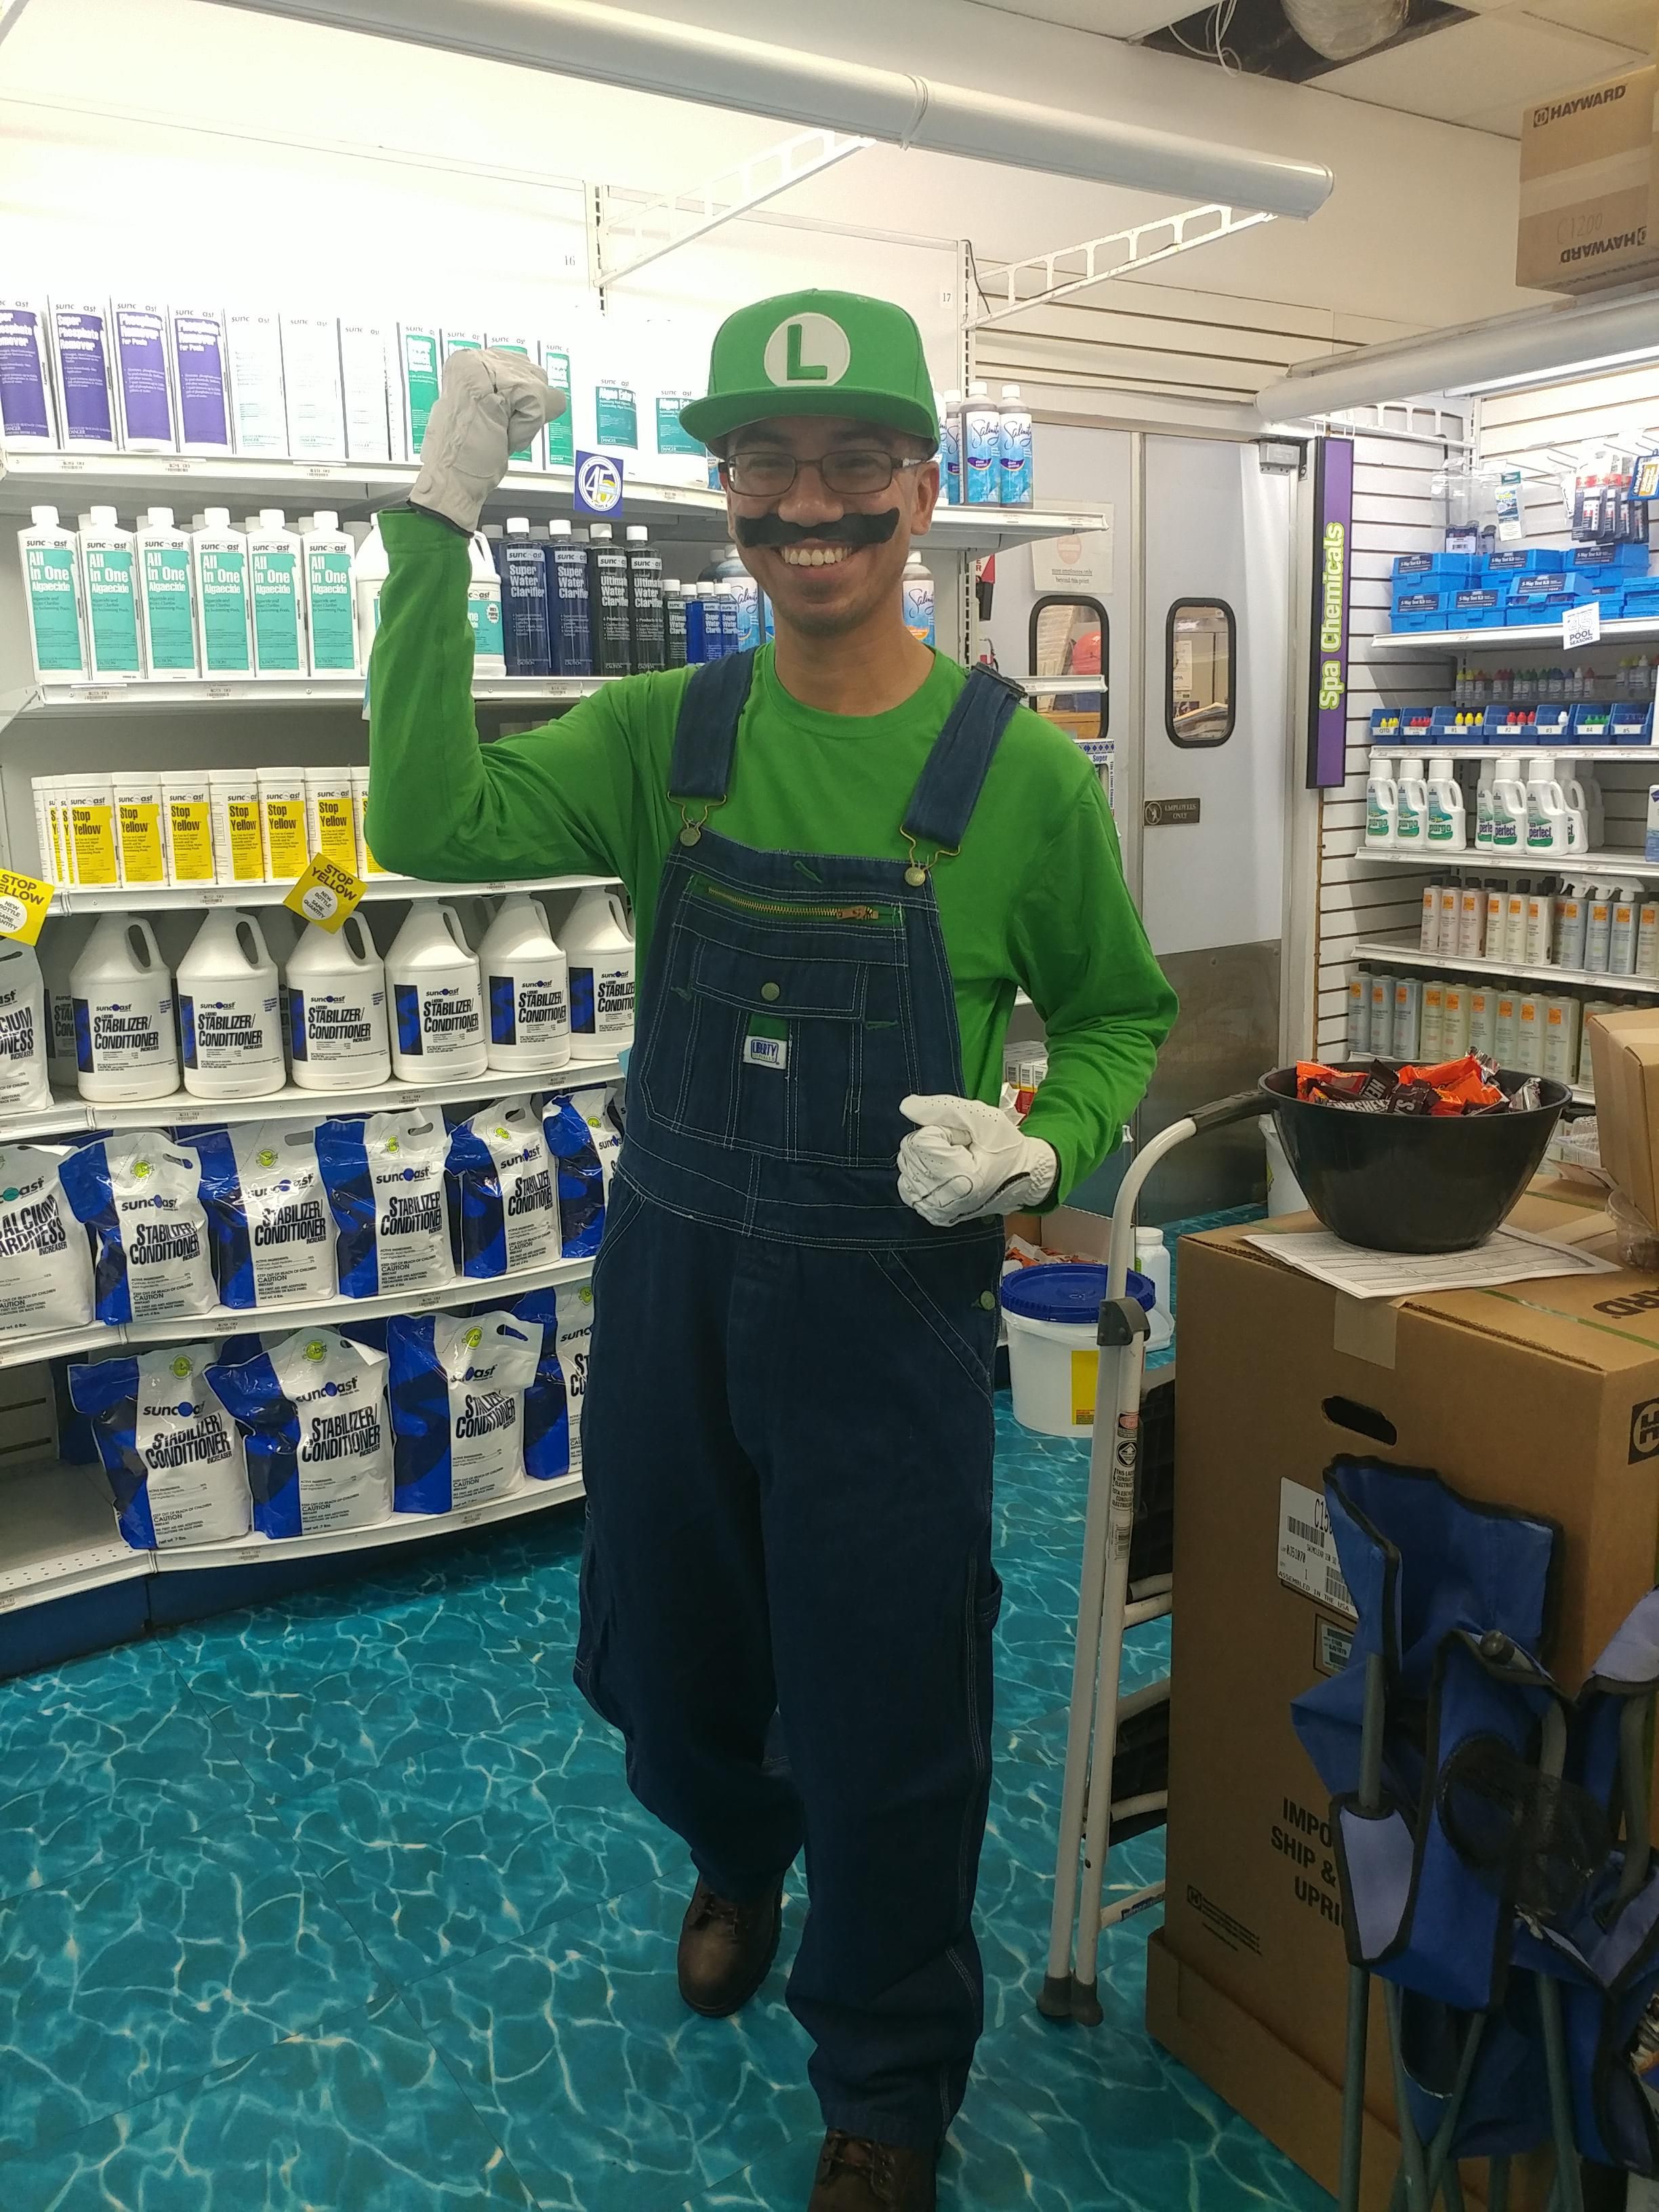 My Luigi costume I wore to work today! :)